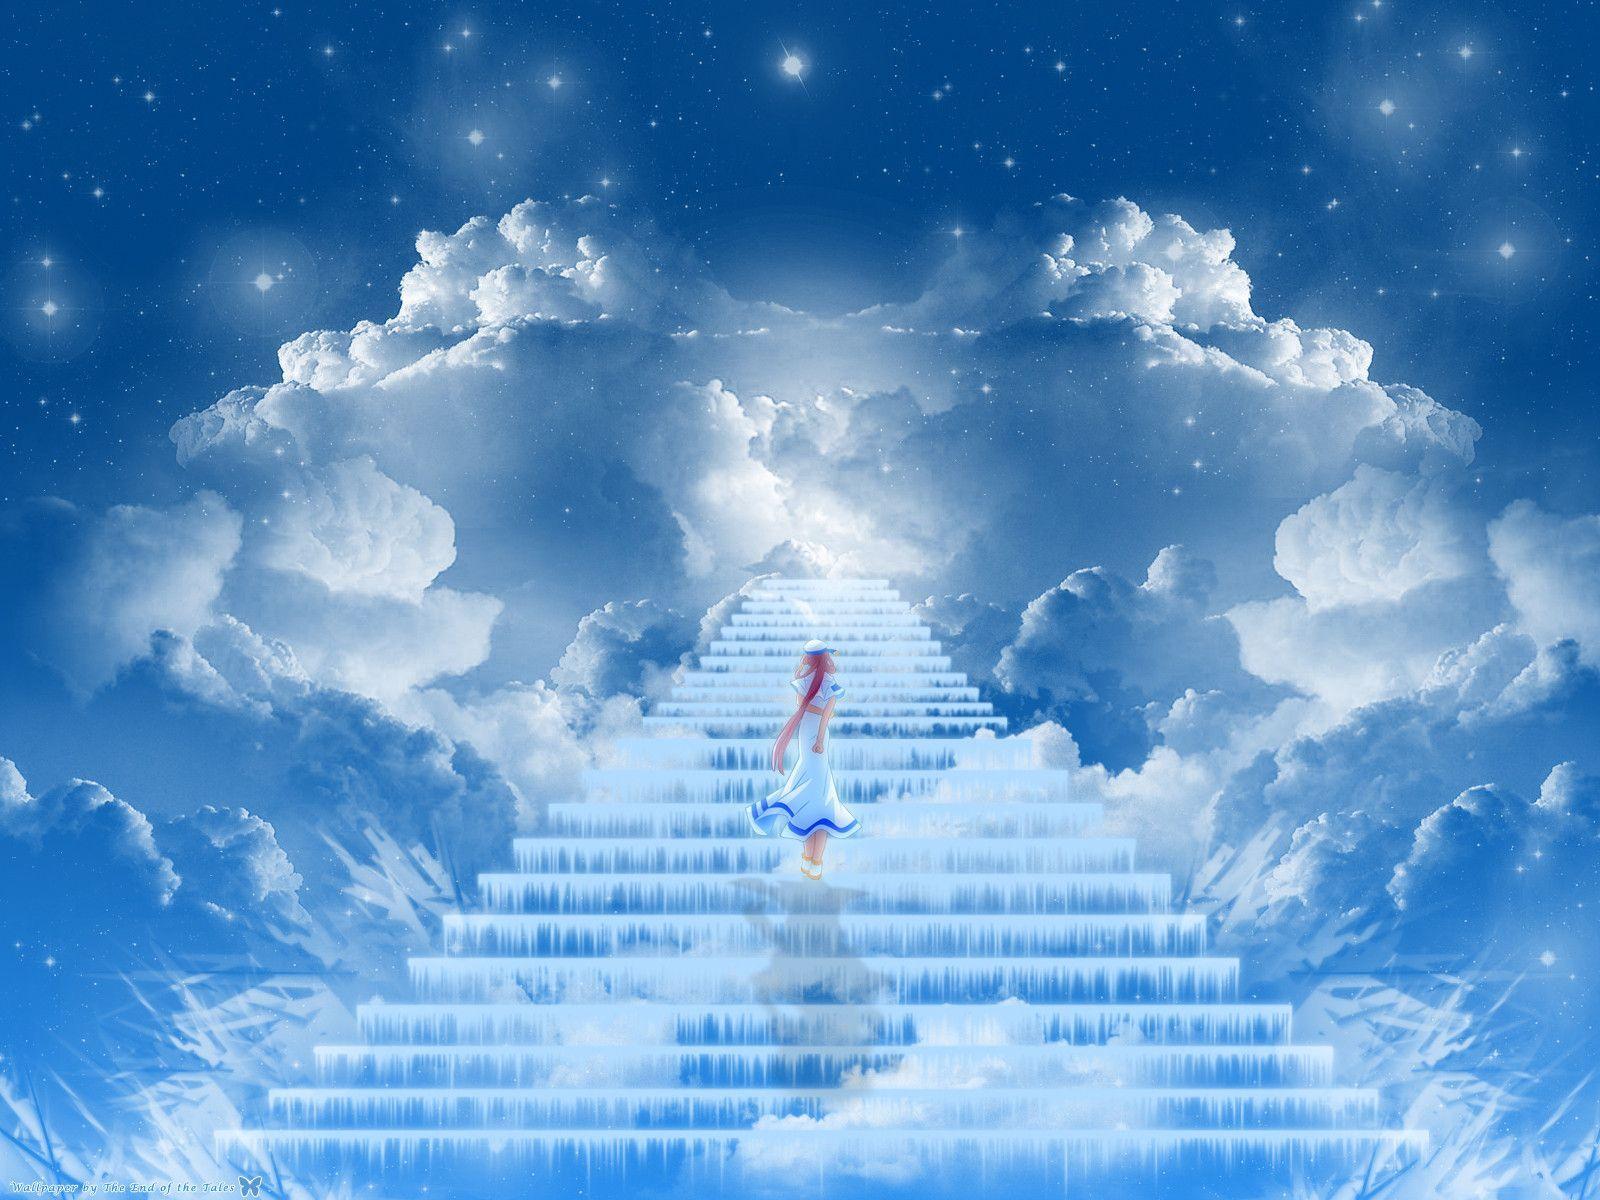 Heaven Image Background. Image Wallpaper